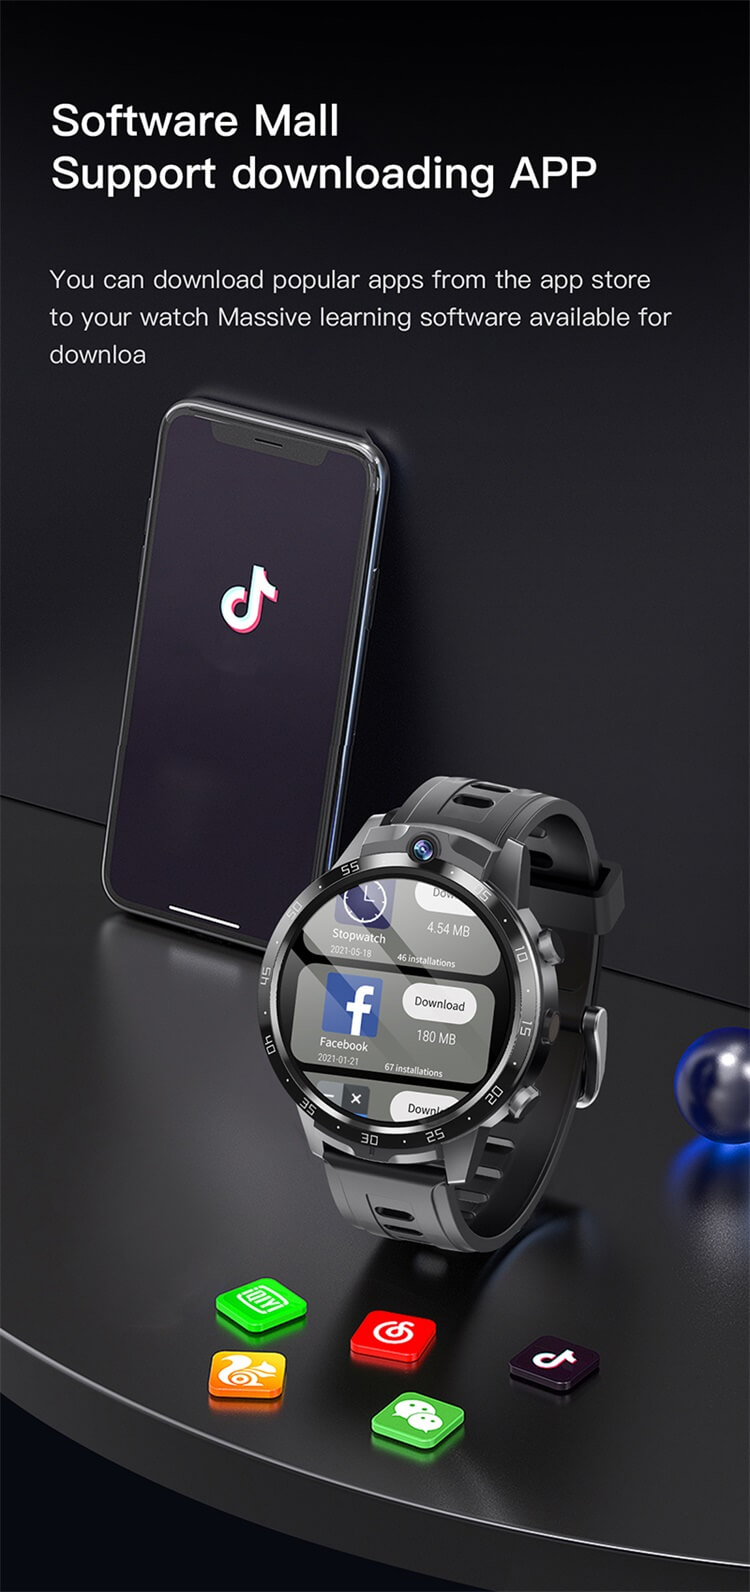 X600S 4G Sim Card Smartwatch 1.6 Inch AMOLED Screen NFC Access Control HD Pixel Dual Camera-Shenzhen Shengye Technology Co.,Ltd